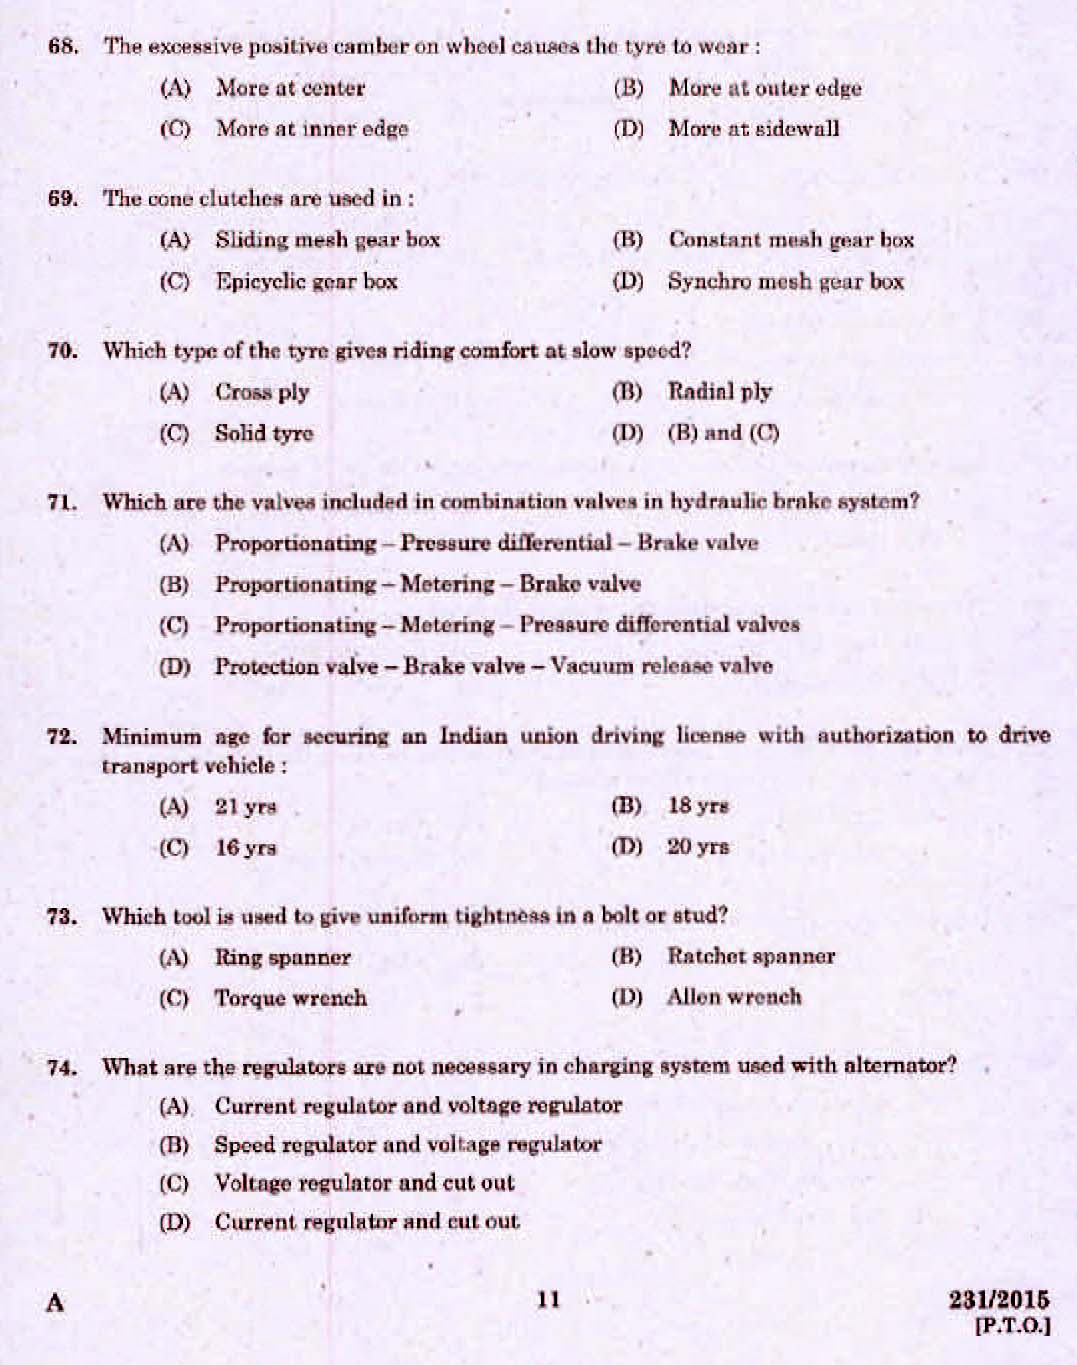 Kerala PSC Electrician Exam 2015 Question Paper Code 2312015 9